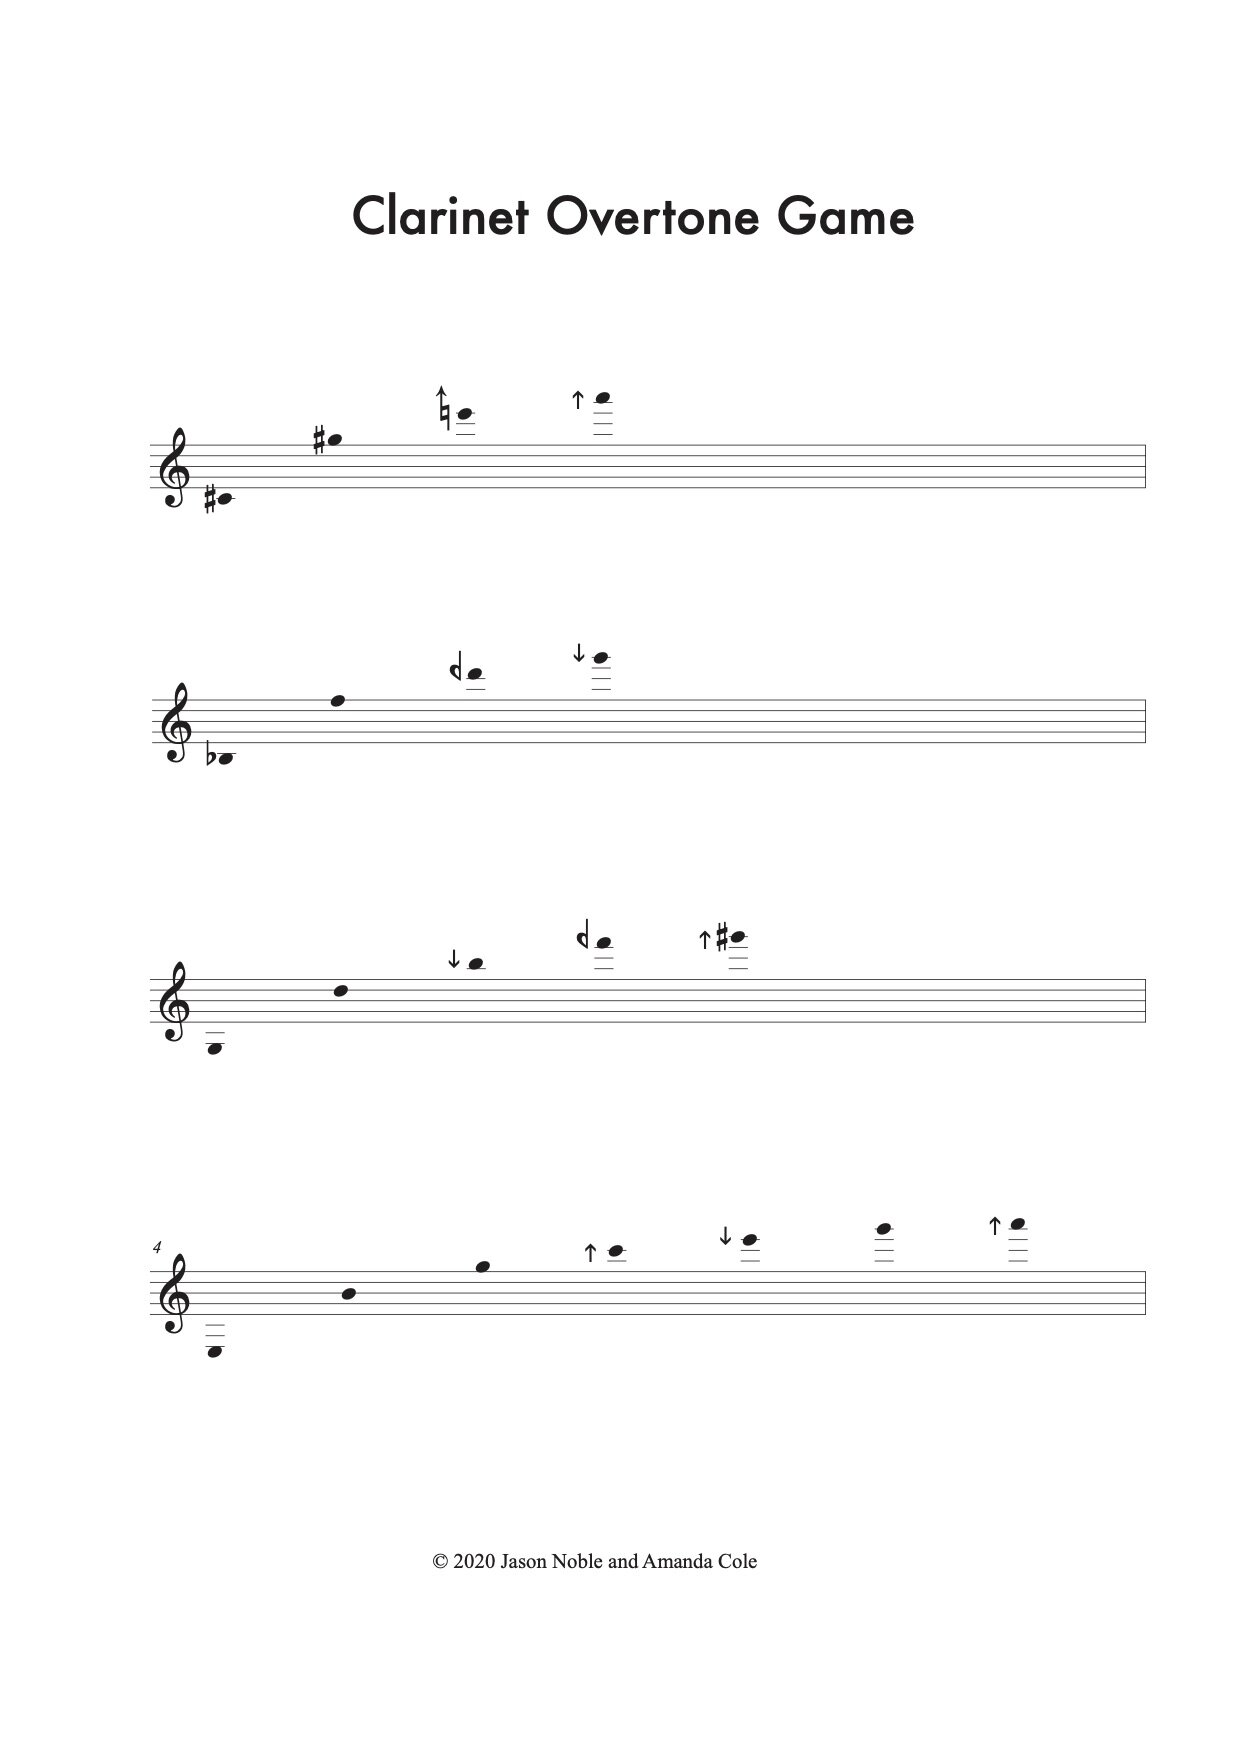 Clarinet Overtones Game Instructions .jpg